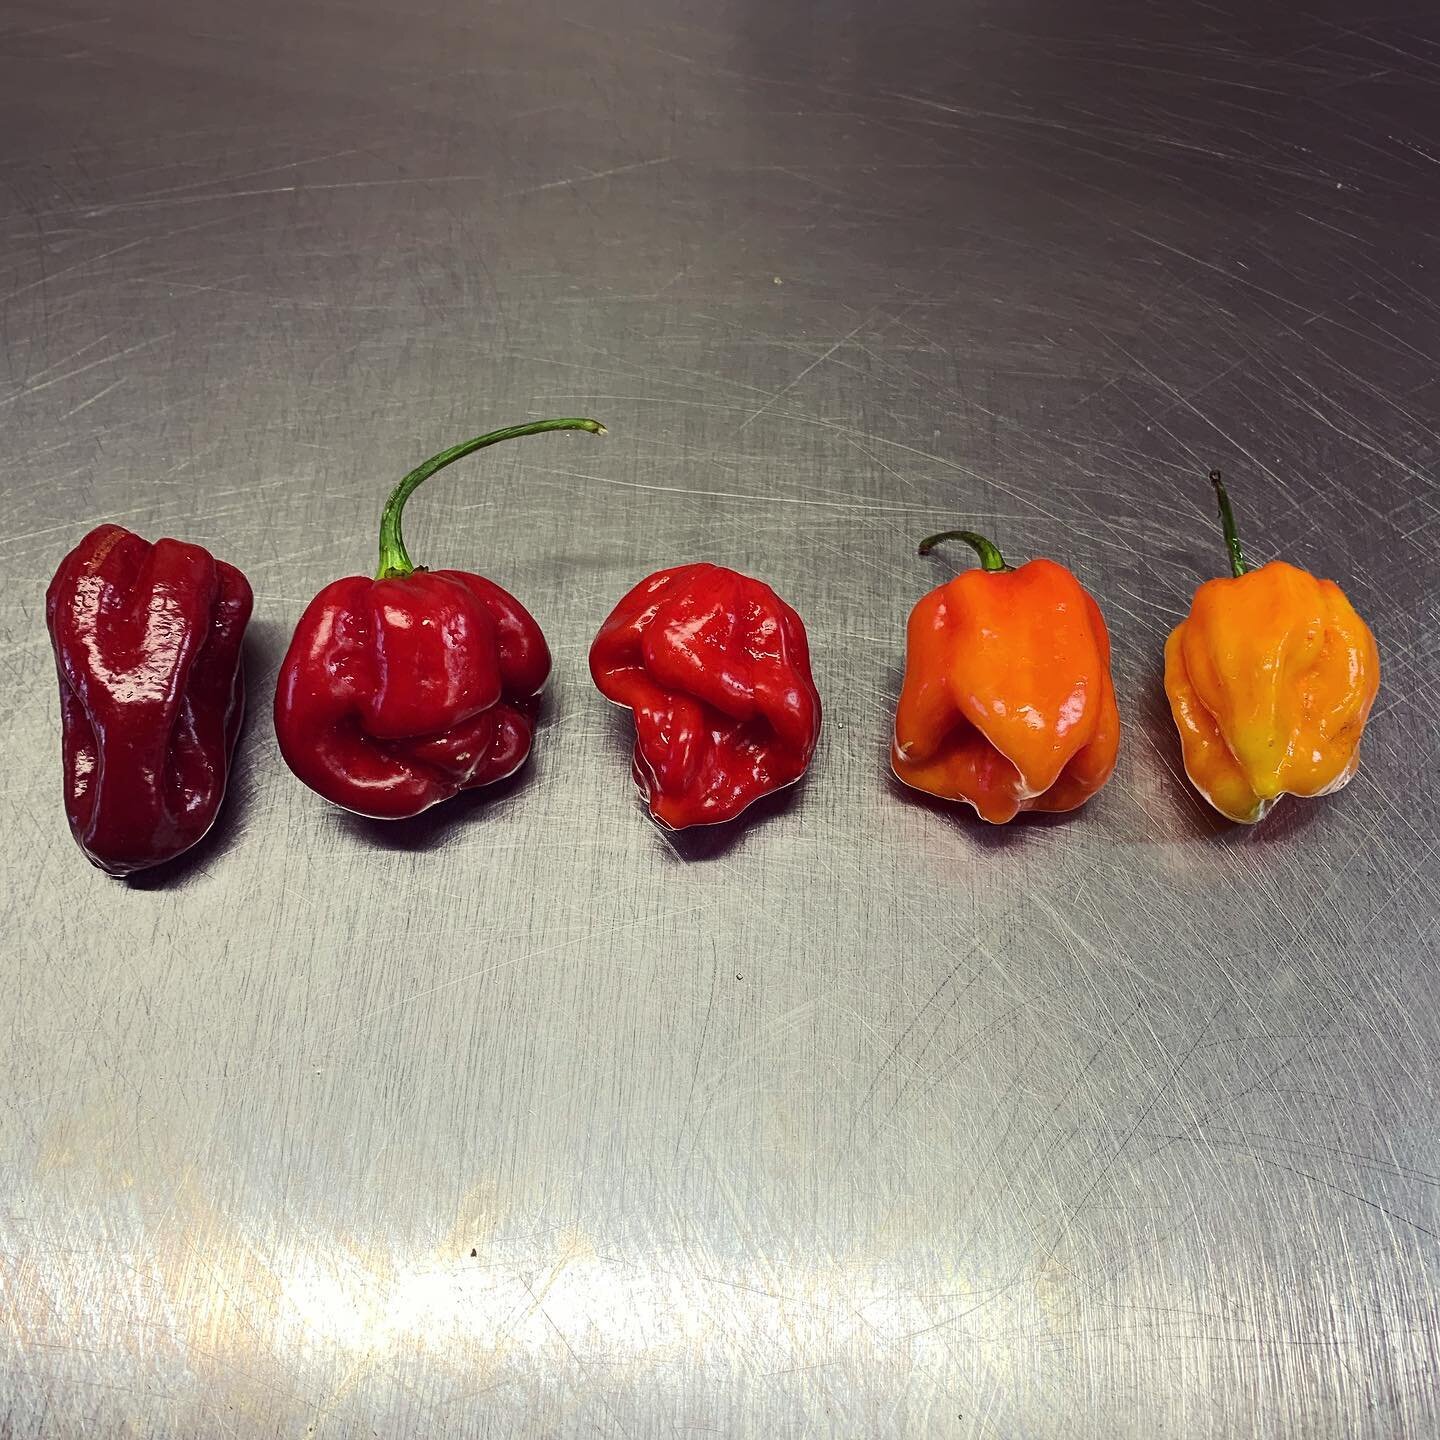 Motley crew. We gon munch these 👅

#satansgravy #chillies #scotchbonnets #tasty #burn #colourfade